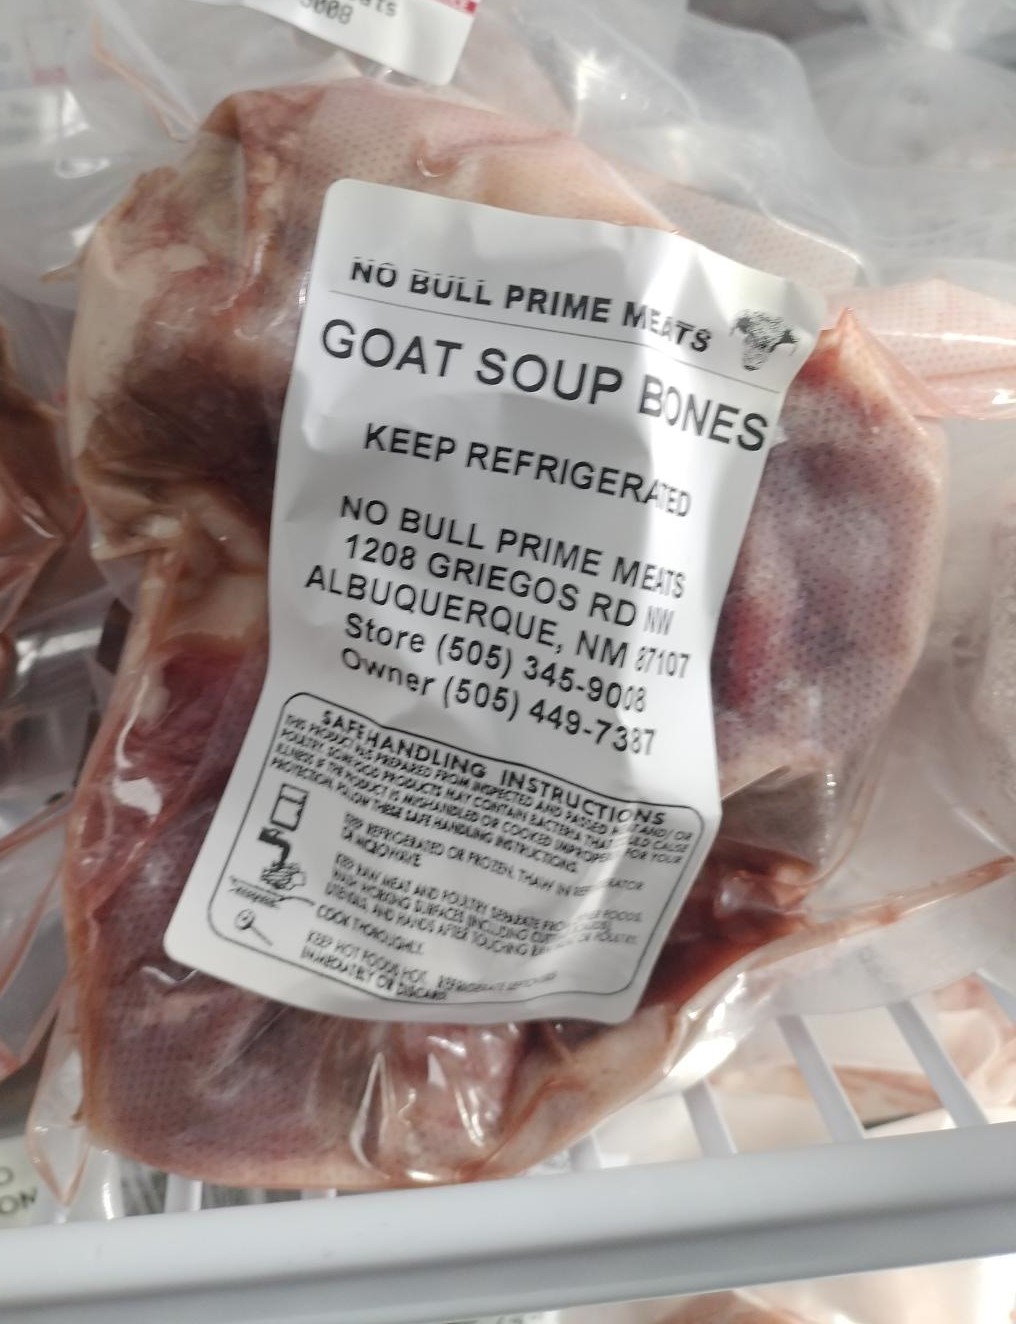 Goat Soup Bones